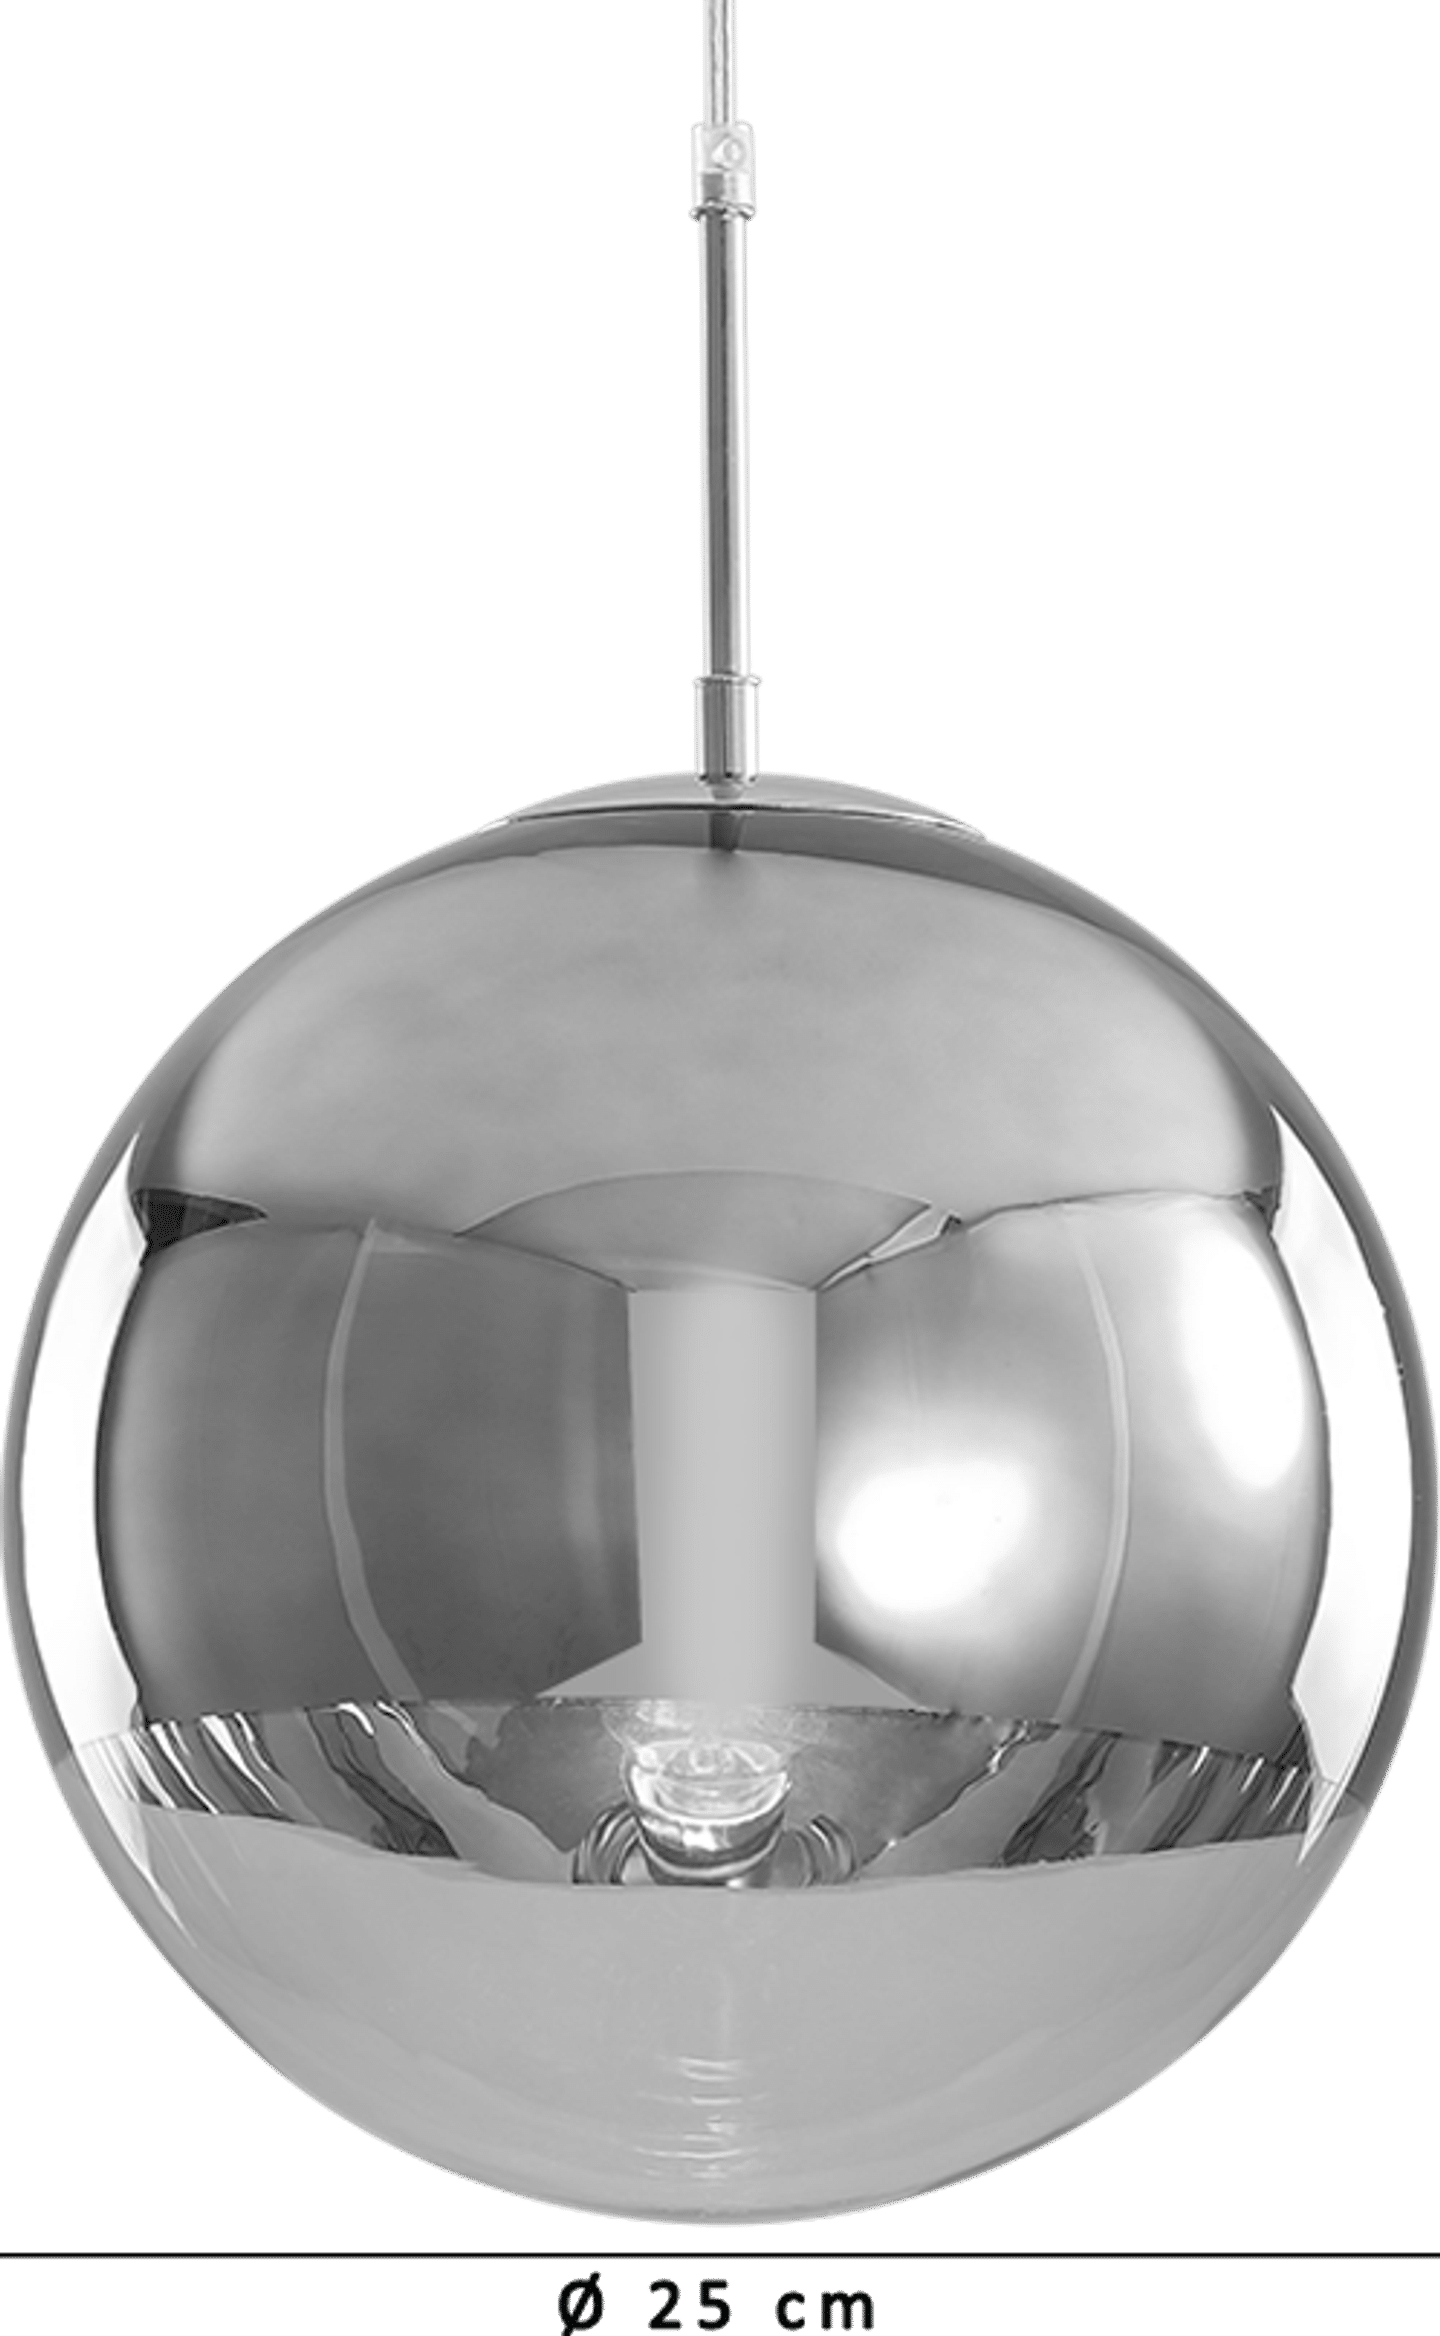 Mirror Ball Pendant Lamp  Chrome image.